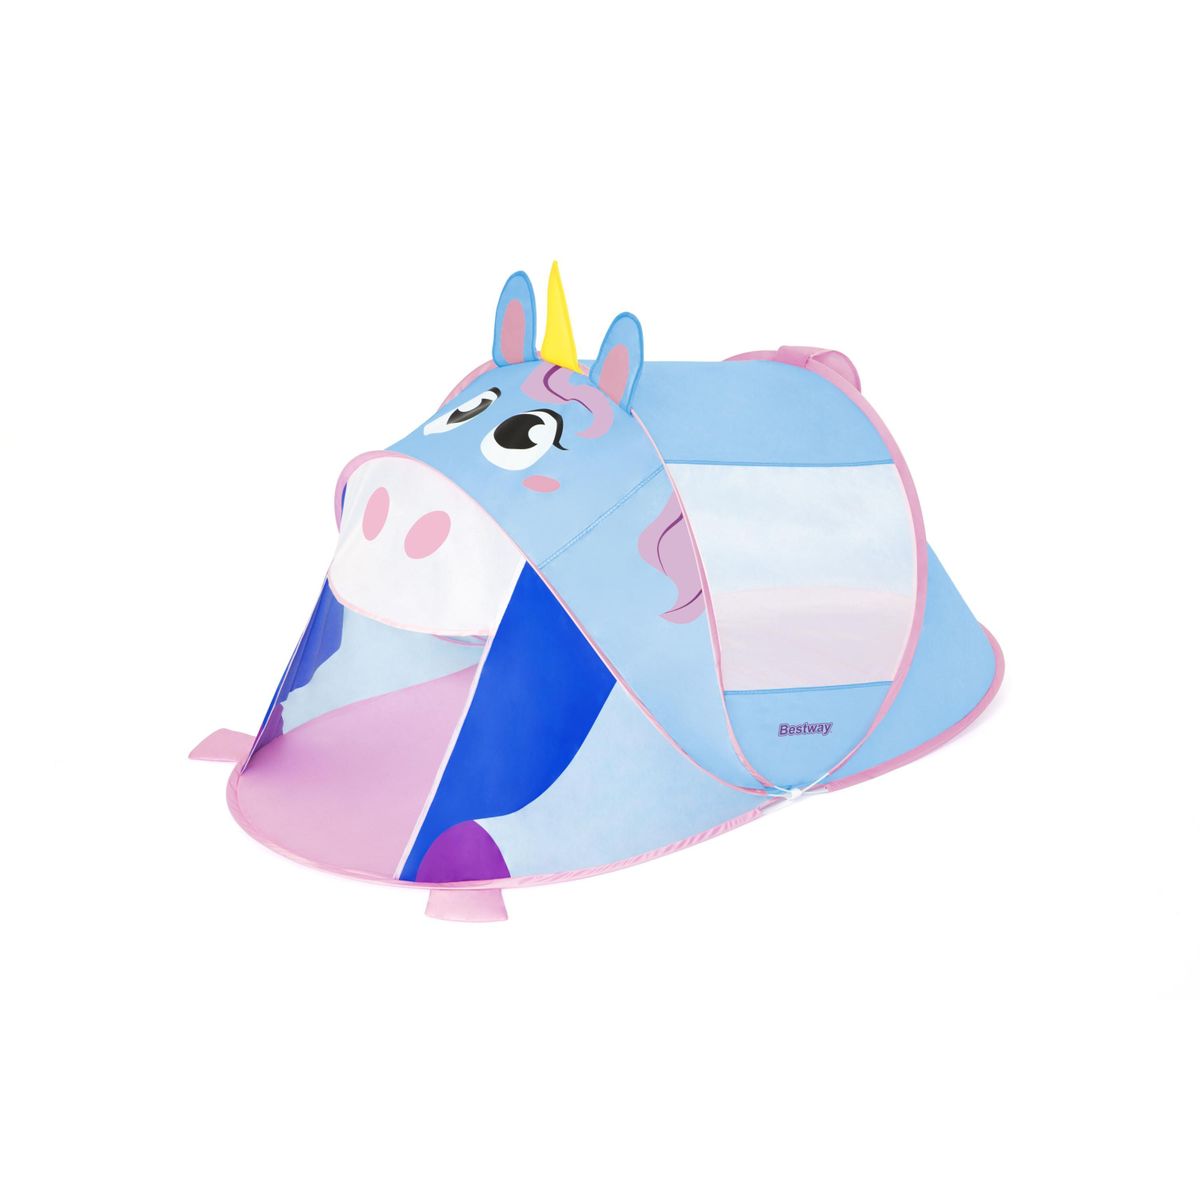 [RDY] [送料無料] Bestway - AdventureChasers Unicorn Play Pop-up Tent [楽天海外通販] | Bestway - AdventureChasers Unicorn Play Pop-up Tent